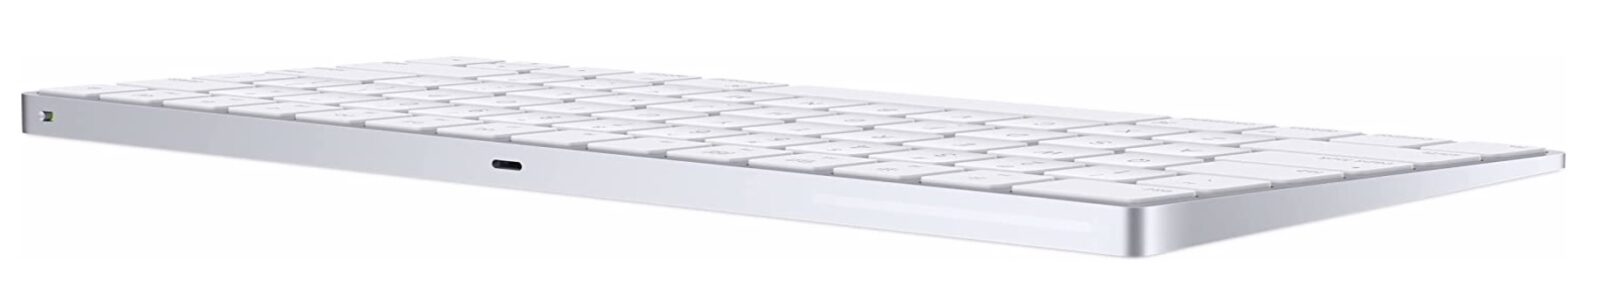 Magic Keyboard Apple al minimo storico 71,80 €